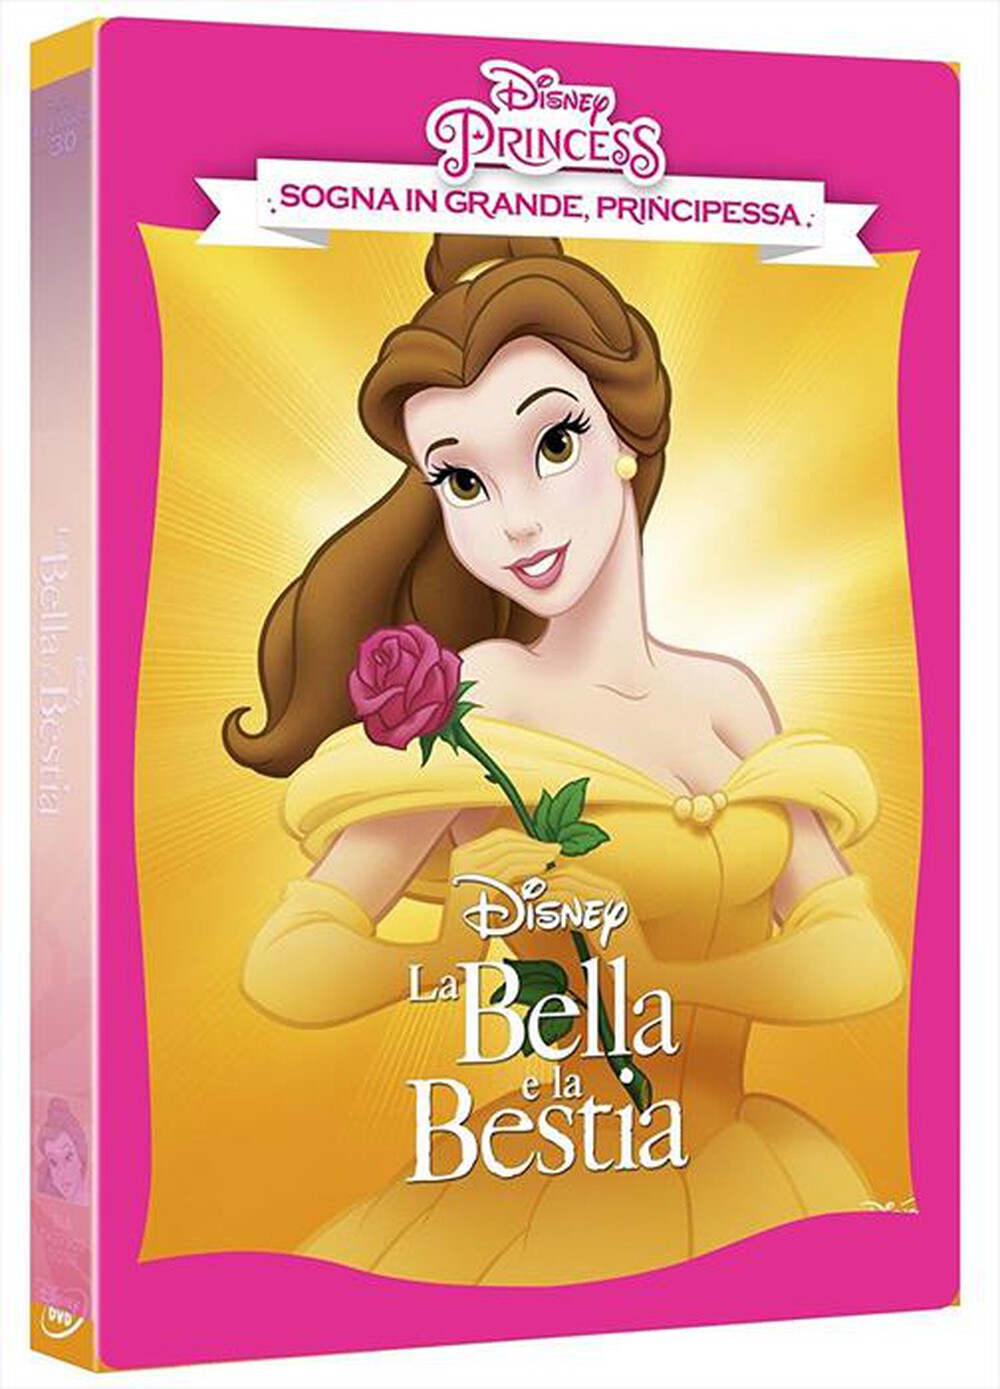 "WALT DISNEY - Bella E La Bestia (La) - "